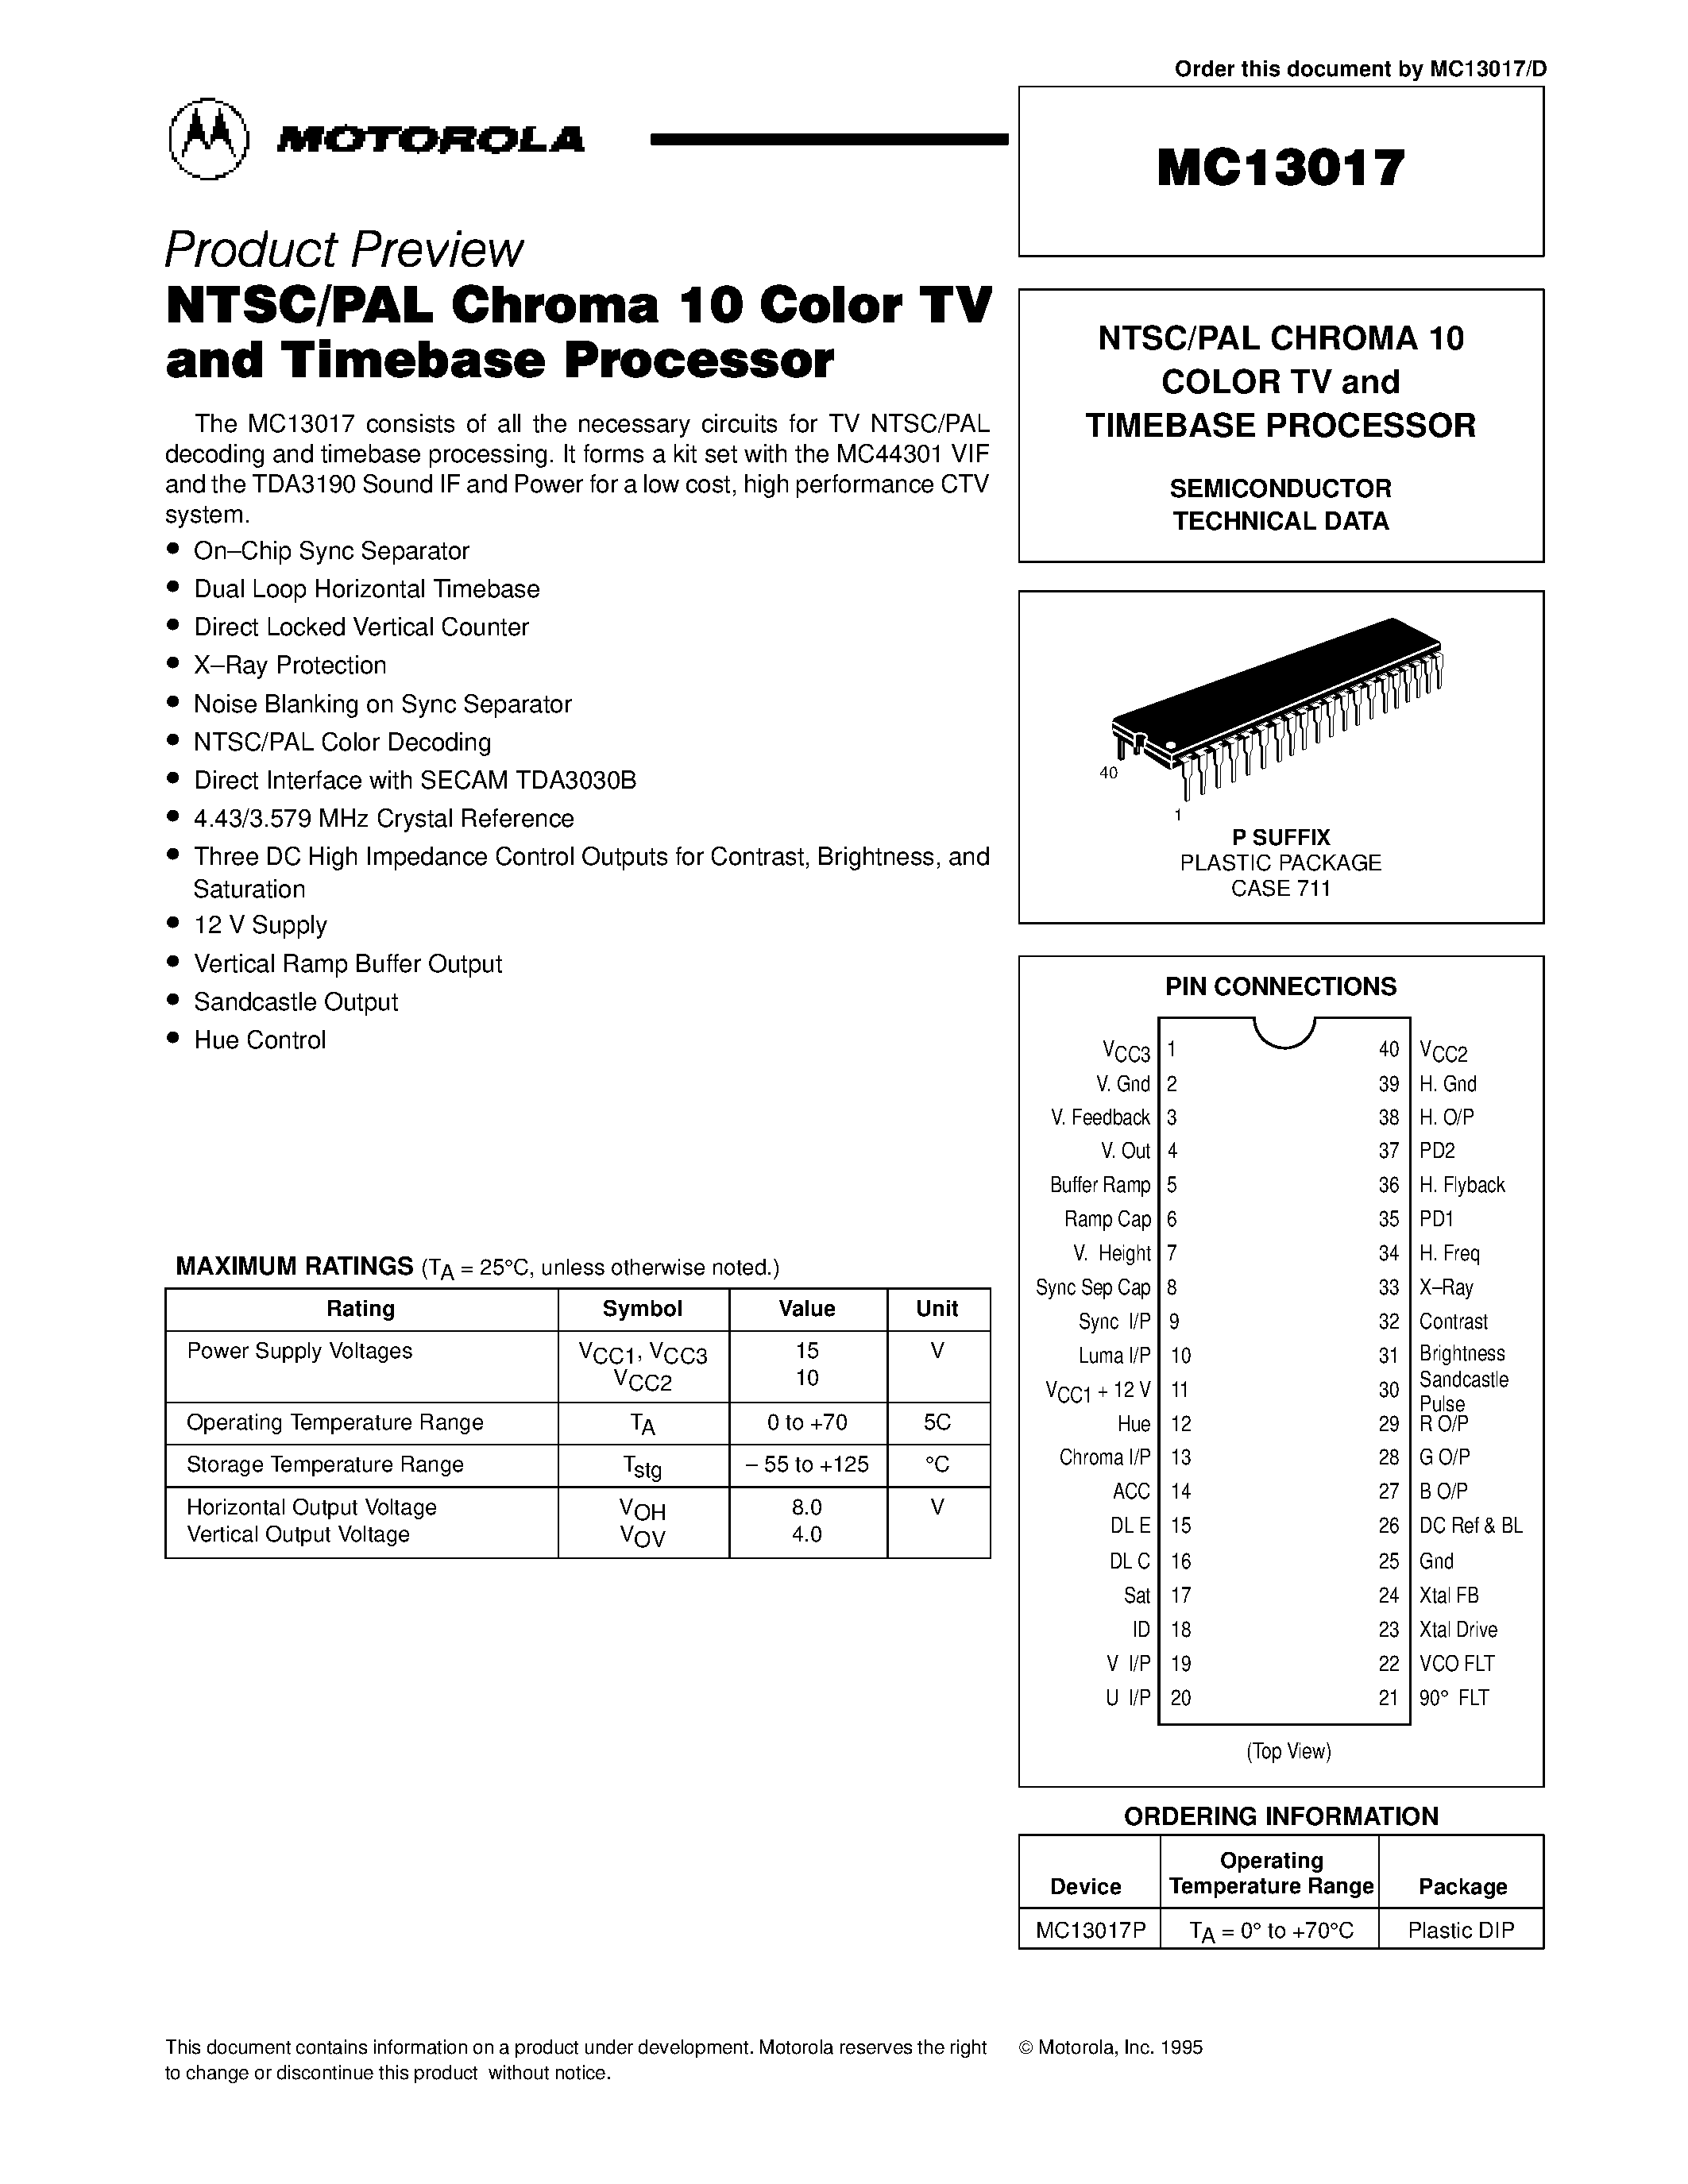 Datasheet MC13017 - NTSC/PAL CHROMA 10 COLOR TV and TIMEBASE PROCESSOR page 1